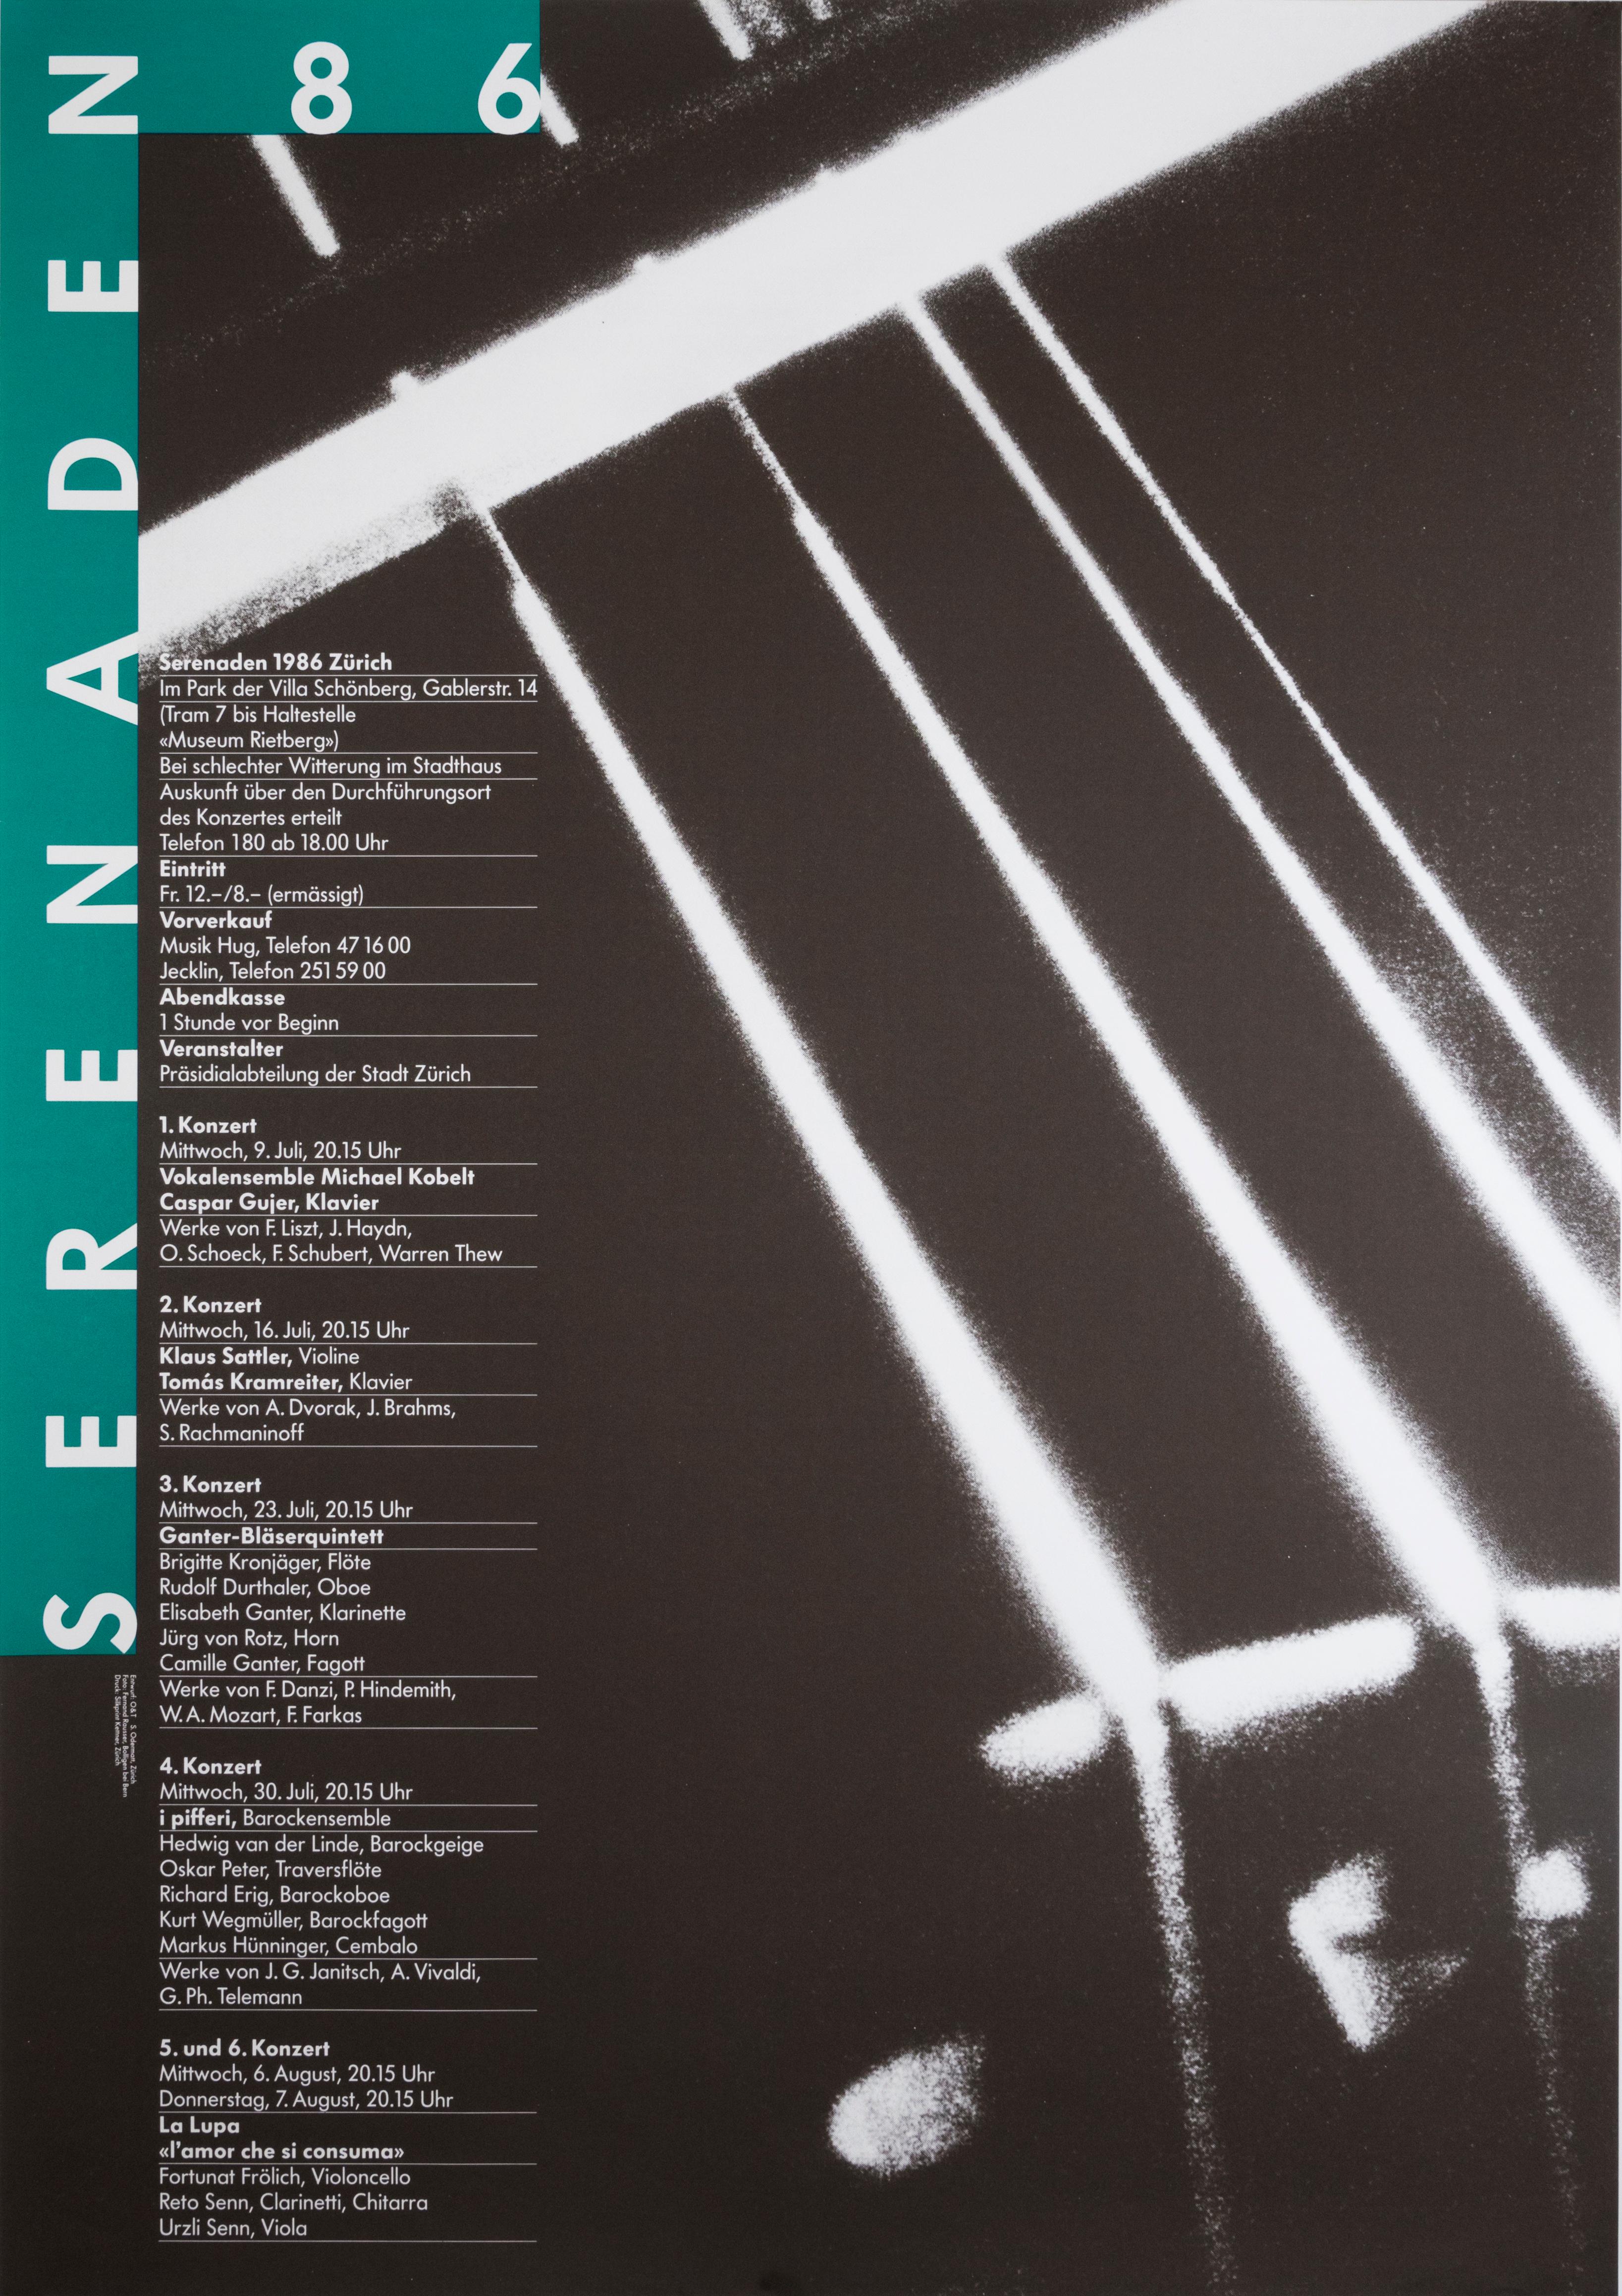 Siegfried Odermatt Abstract Print - "Serenaden 1986" Swiss Post Modern Music Festival Cello Original Vintage Poster